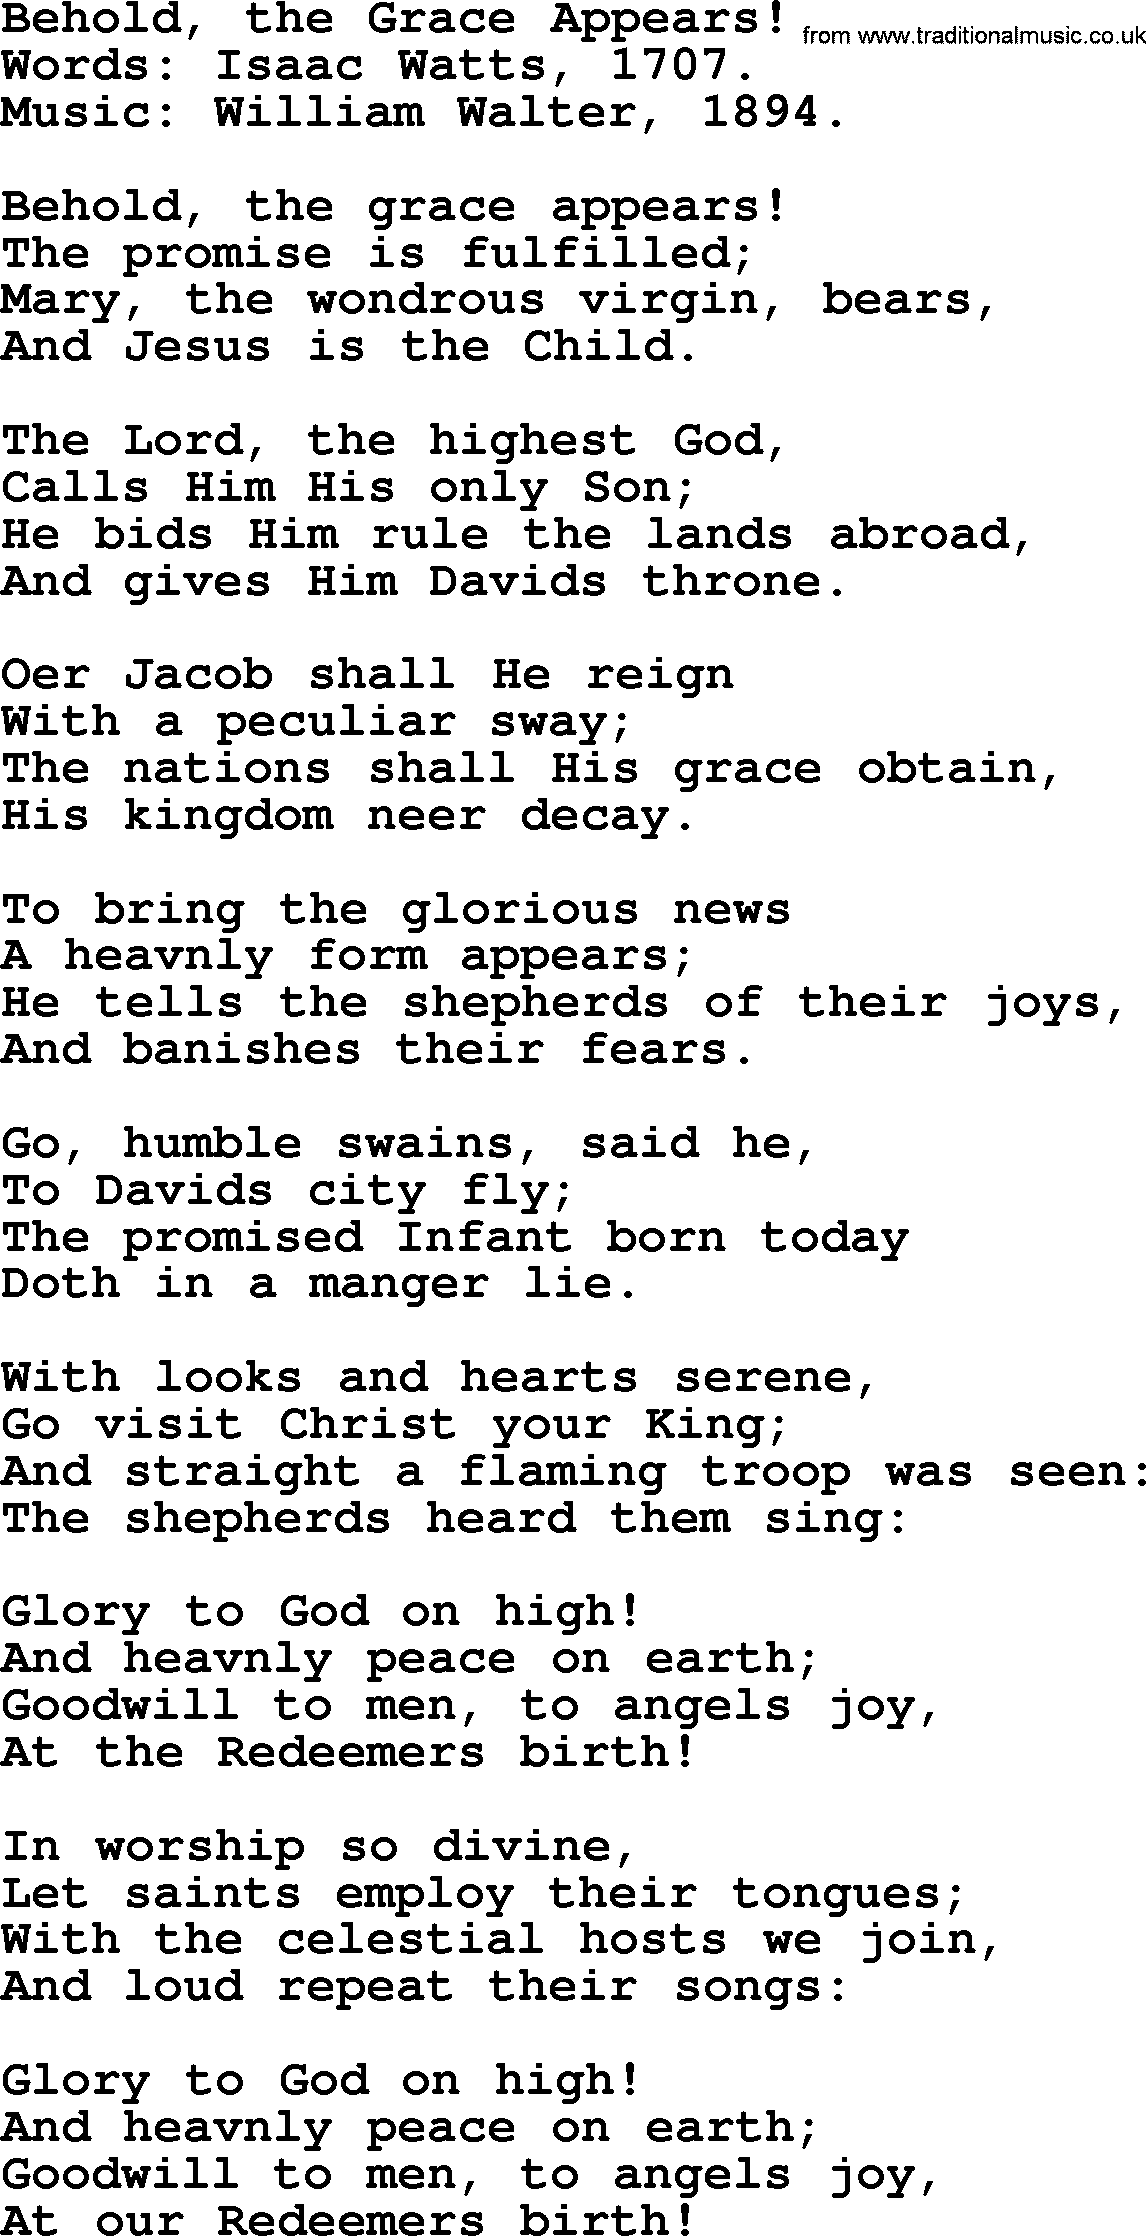 Isaac Watts Christian hymn: Behold, the Grace Appears!- lyricss